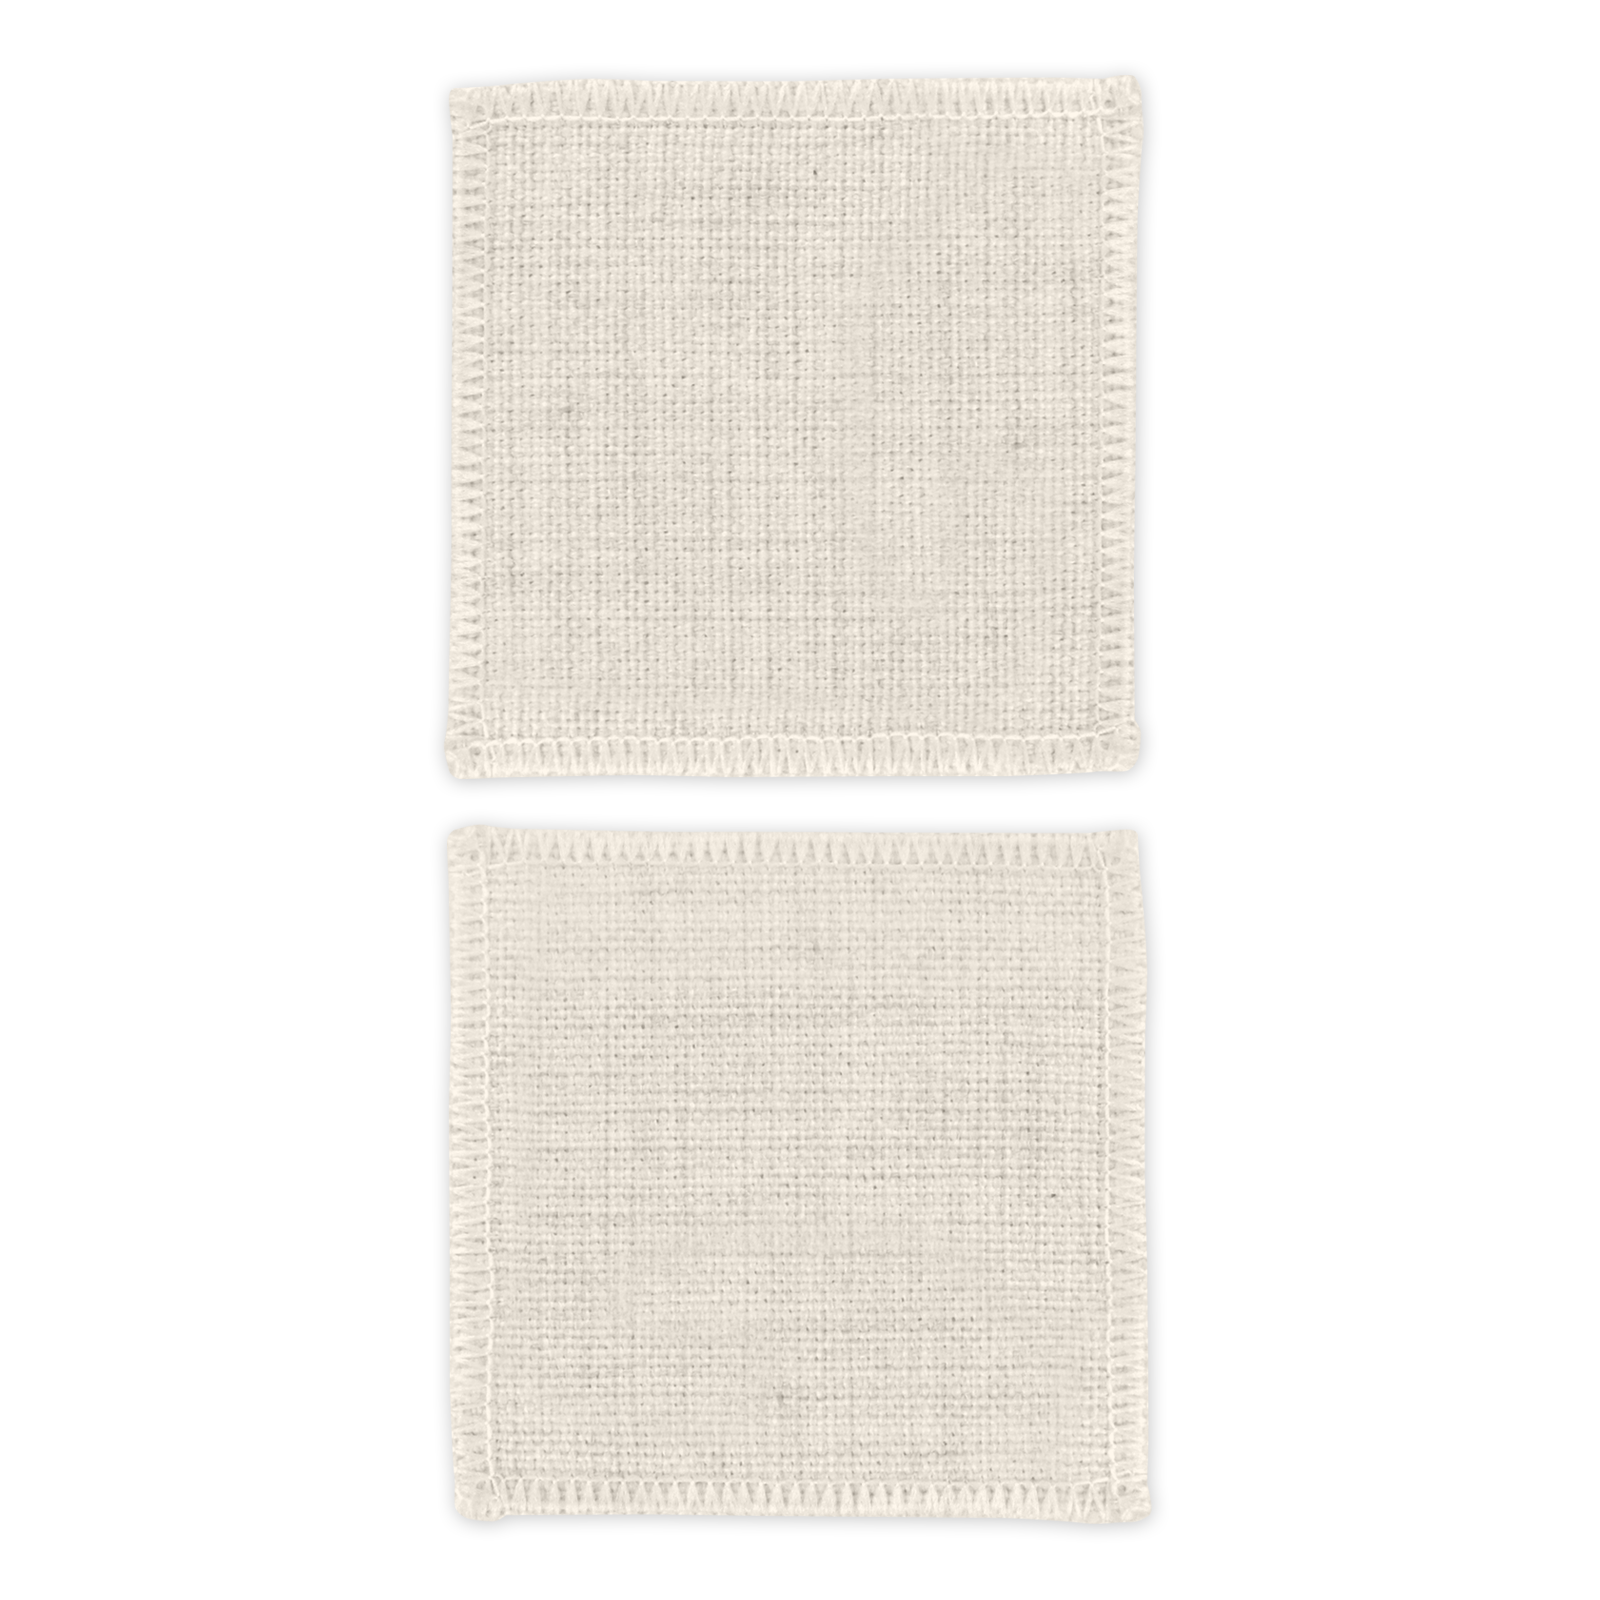 Blank/Customizable Linen Coasters - Set of 2